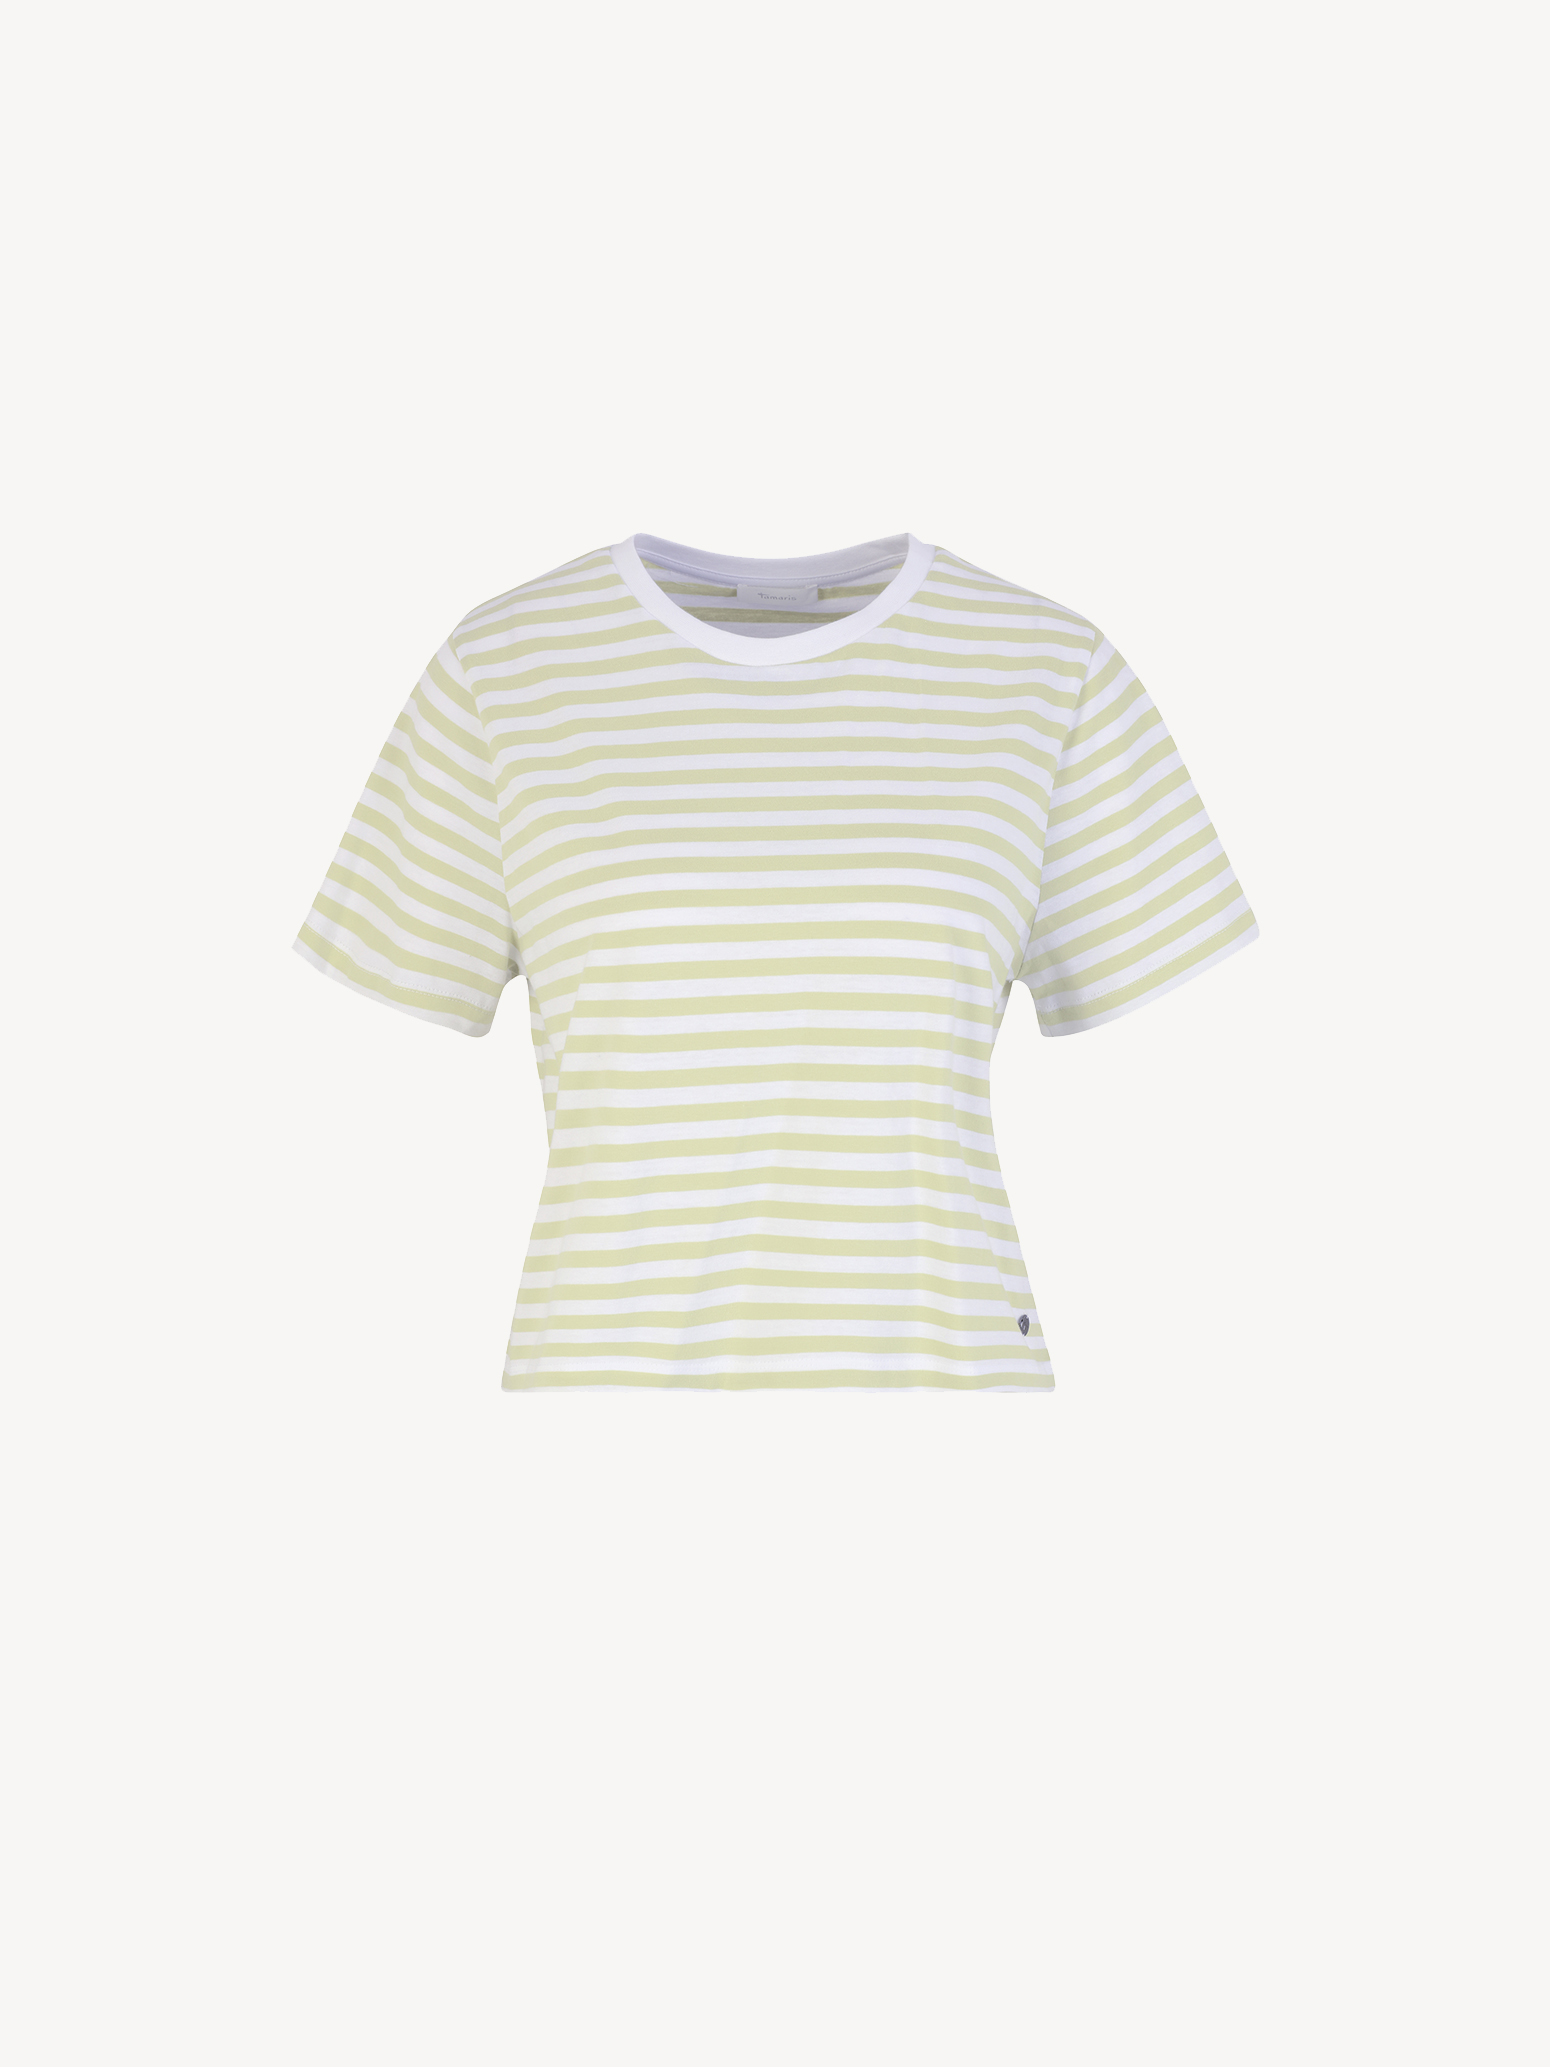 kaufen! & - T-shirt TAW0427-63101: Tops Tamaris online Shirts grün